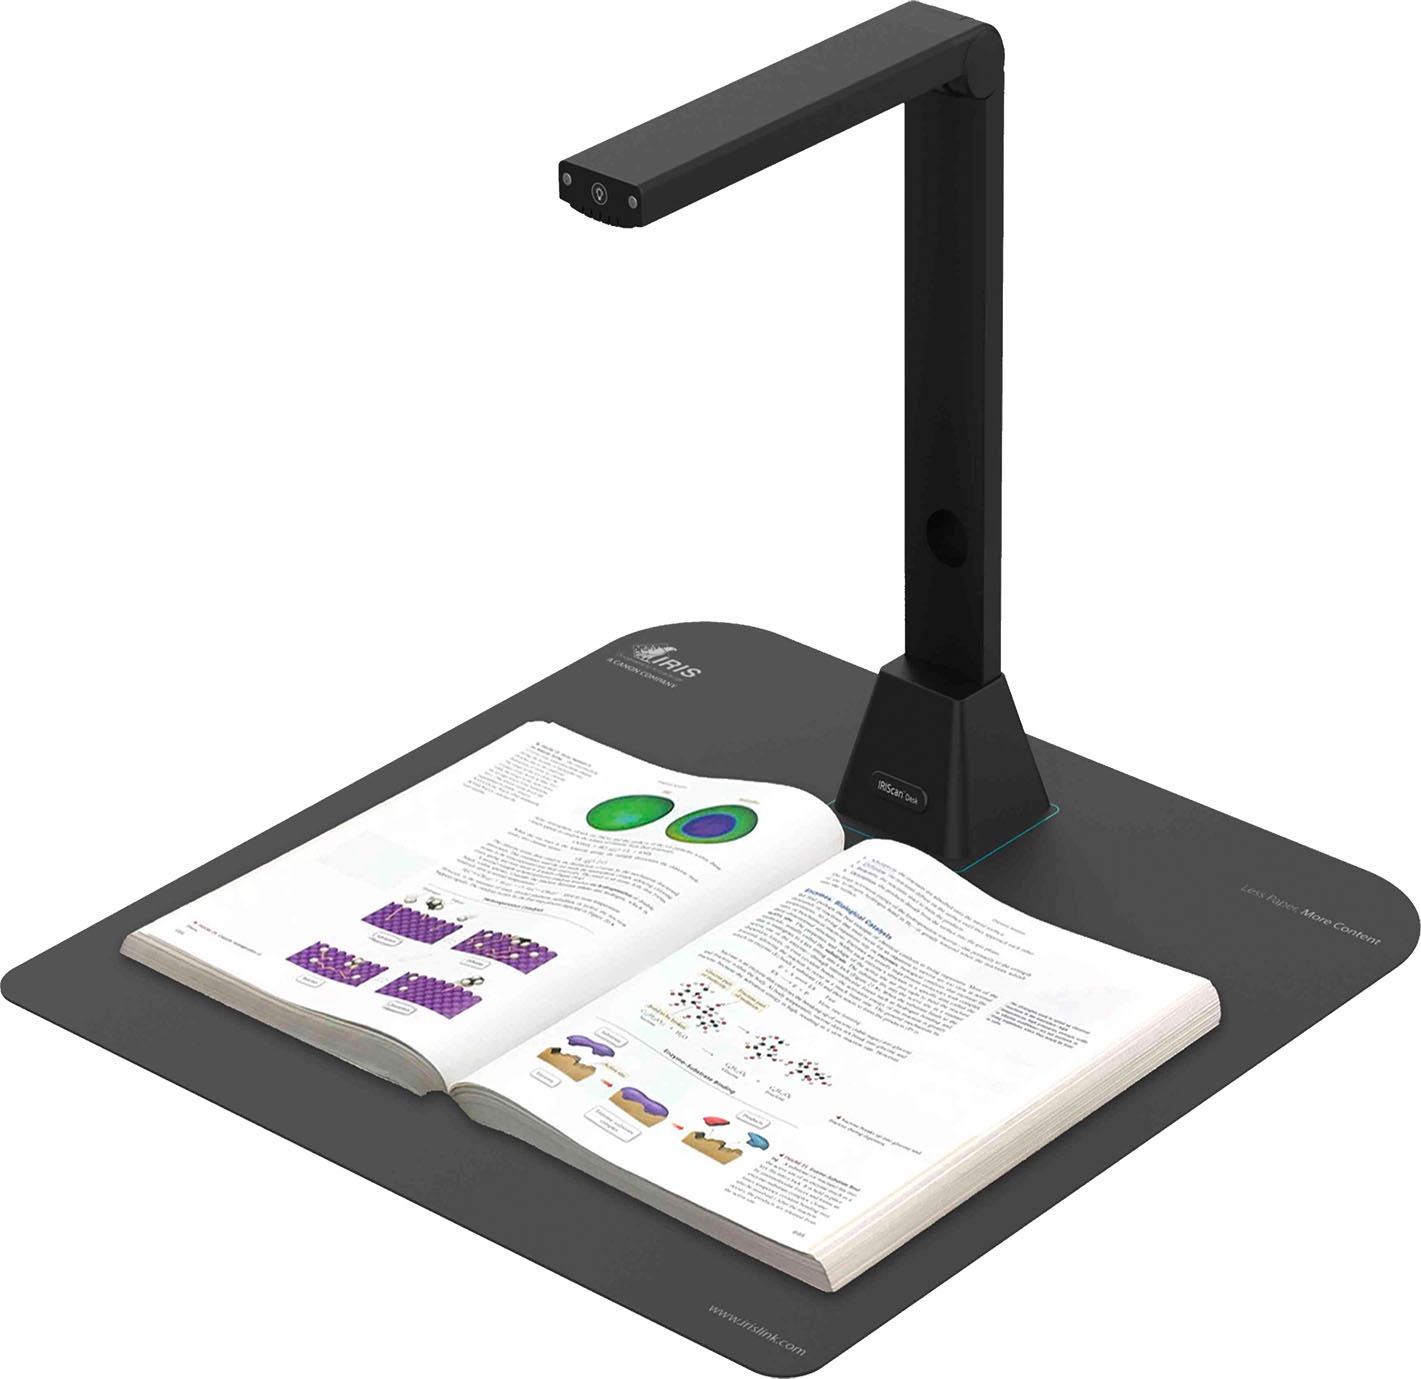 IRIS Scanner »can Desk 5 Pro«